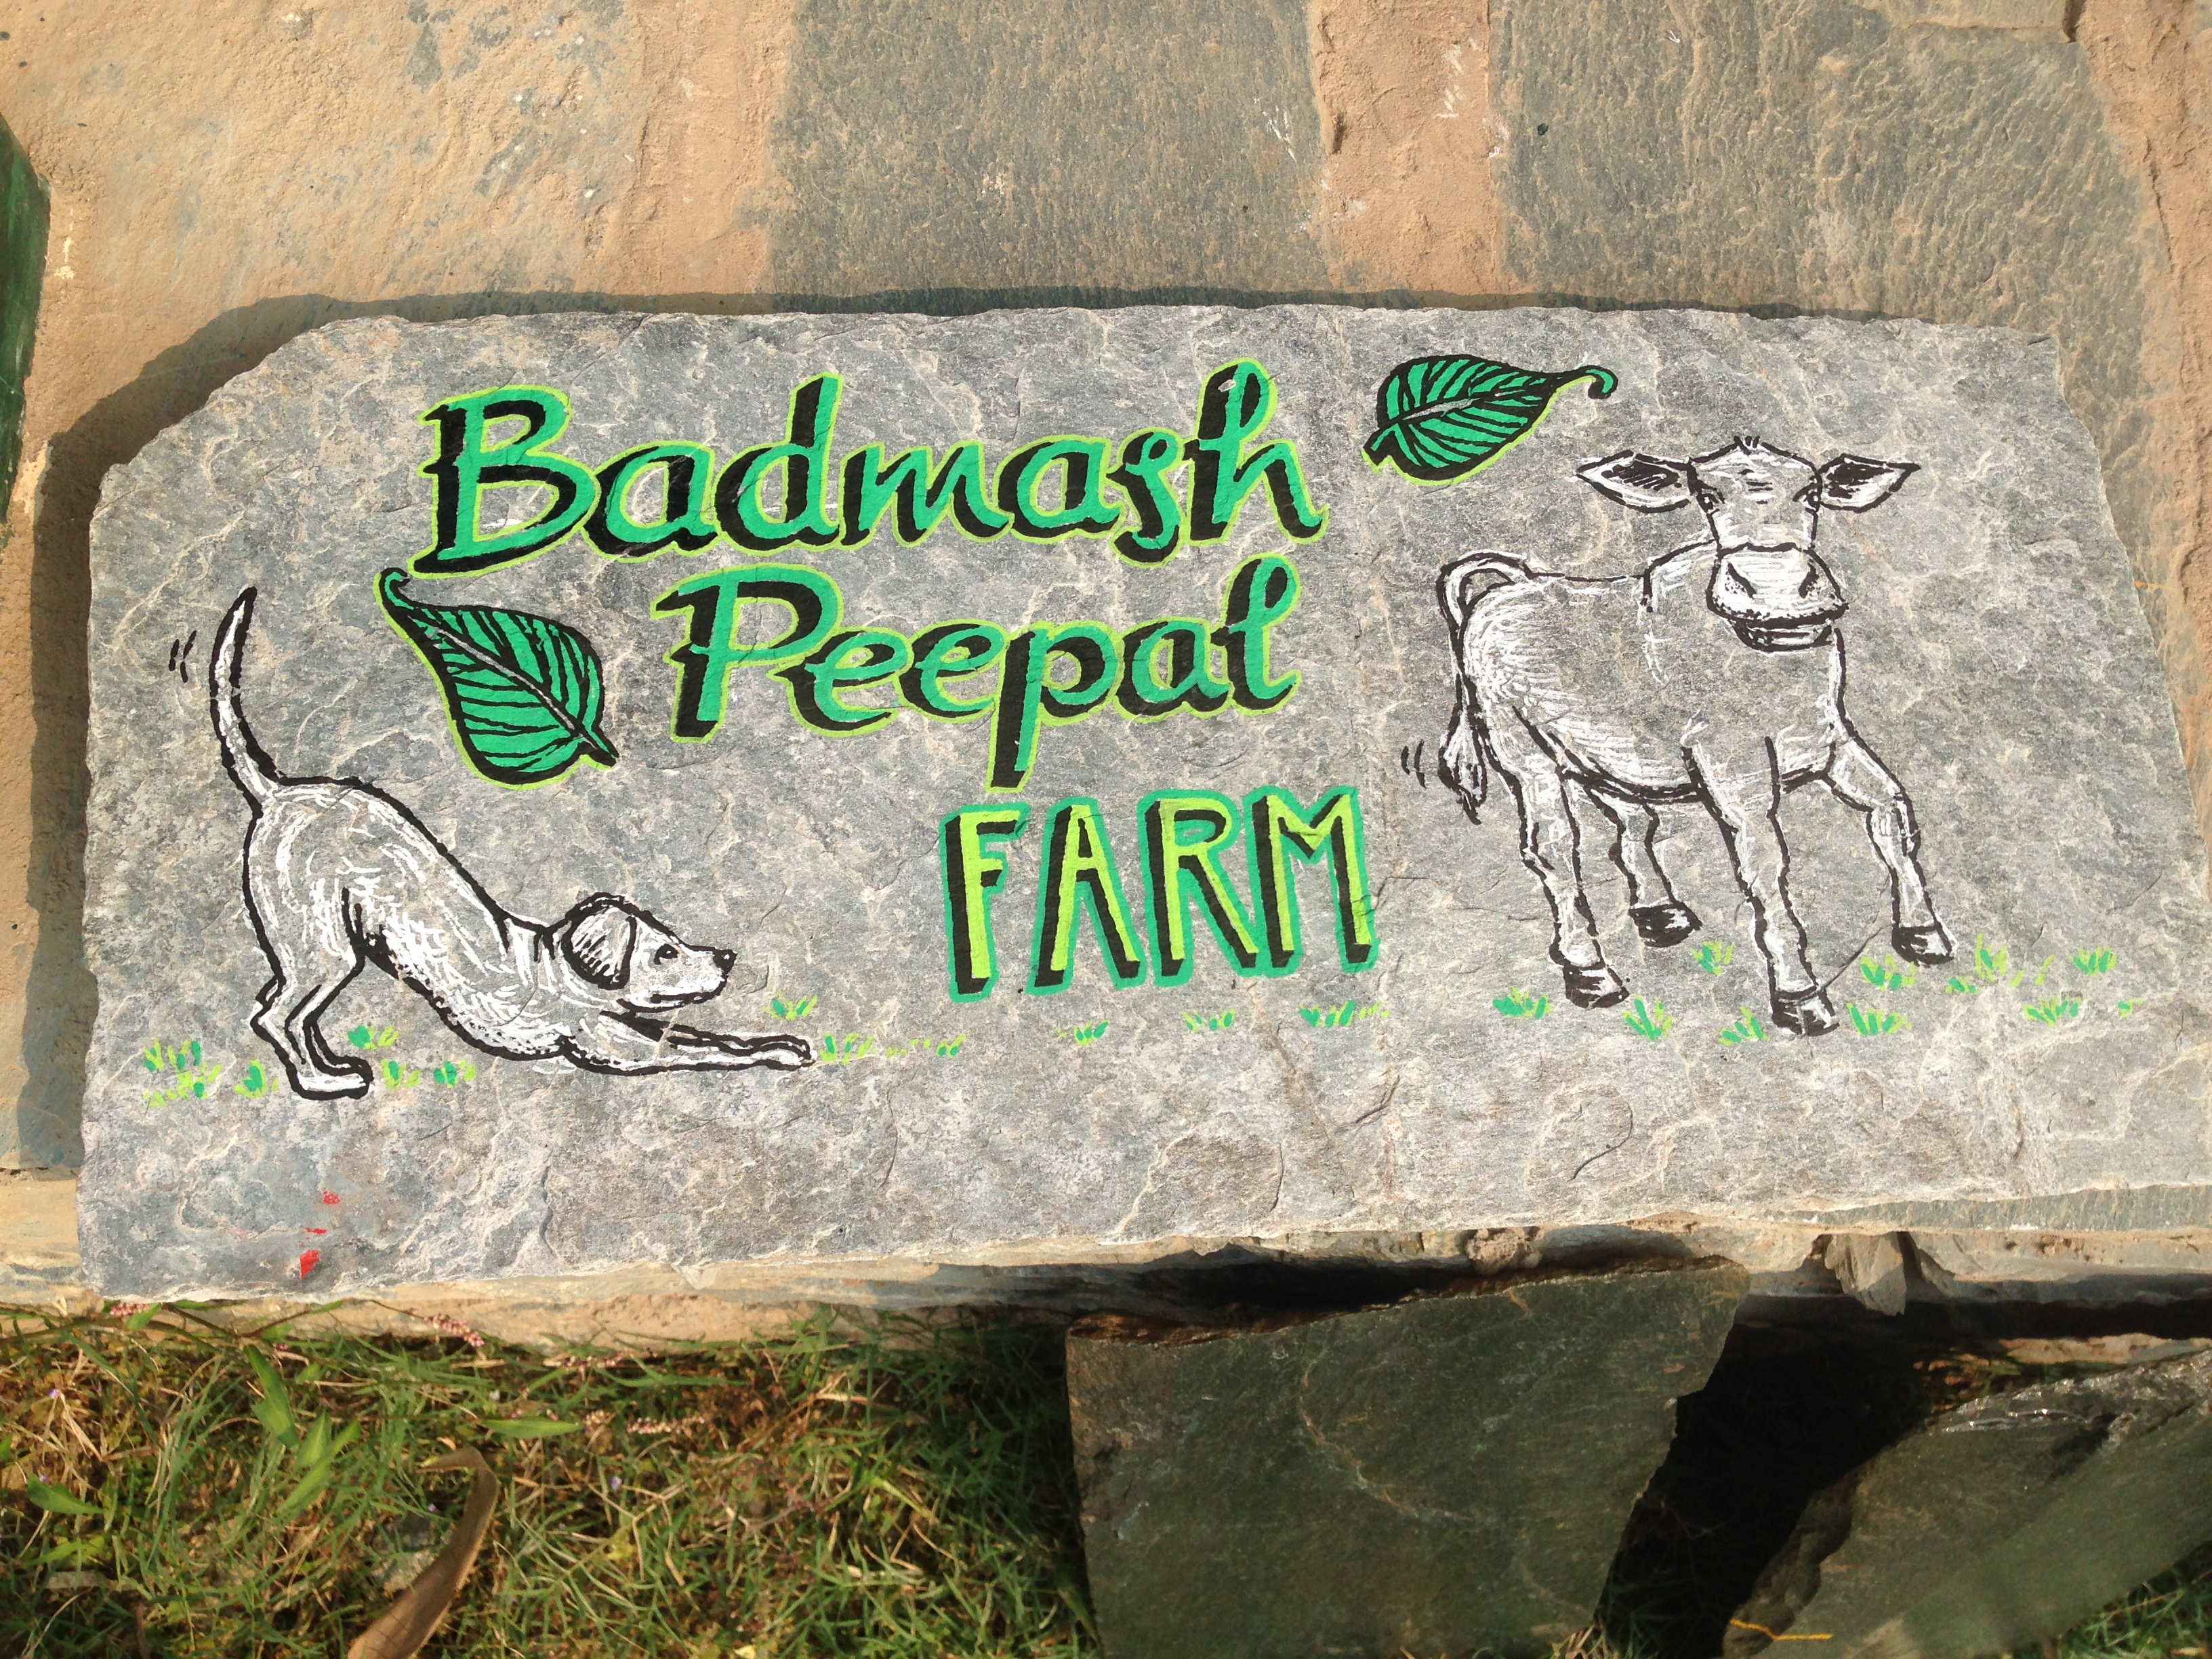 signpainting handlettering lilian leahy rotterdam badmash peepal farm india